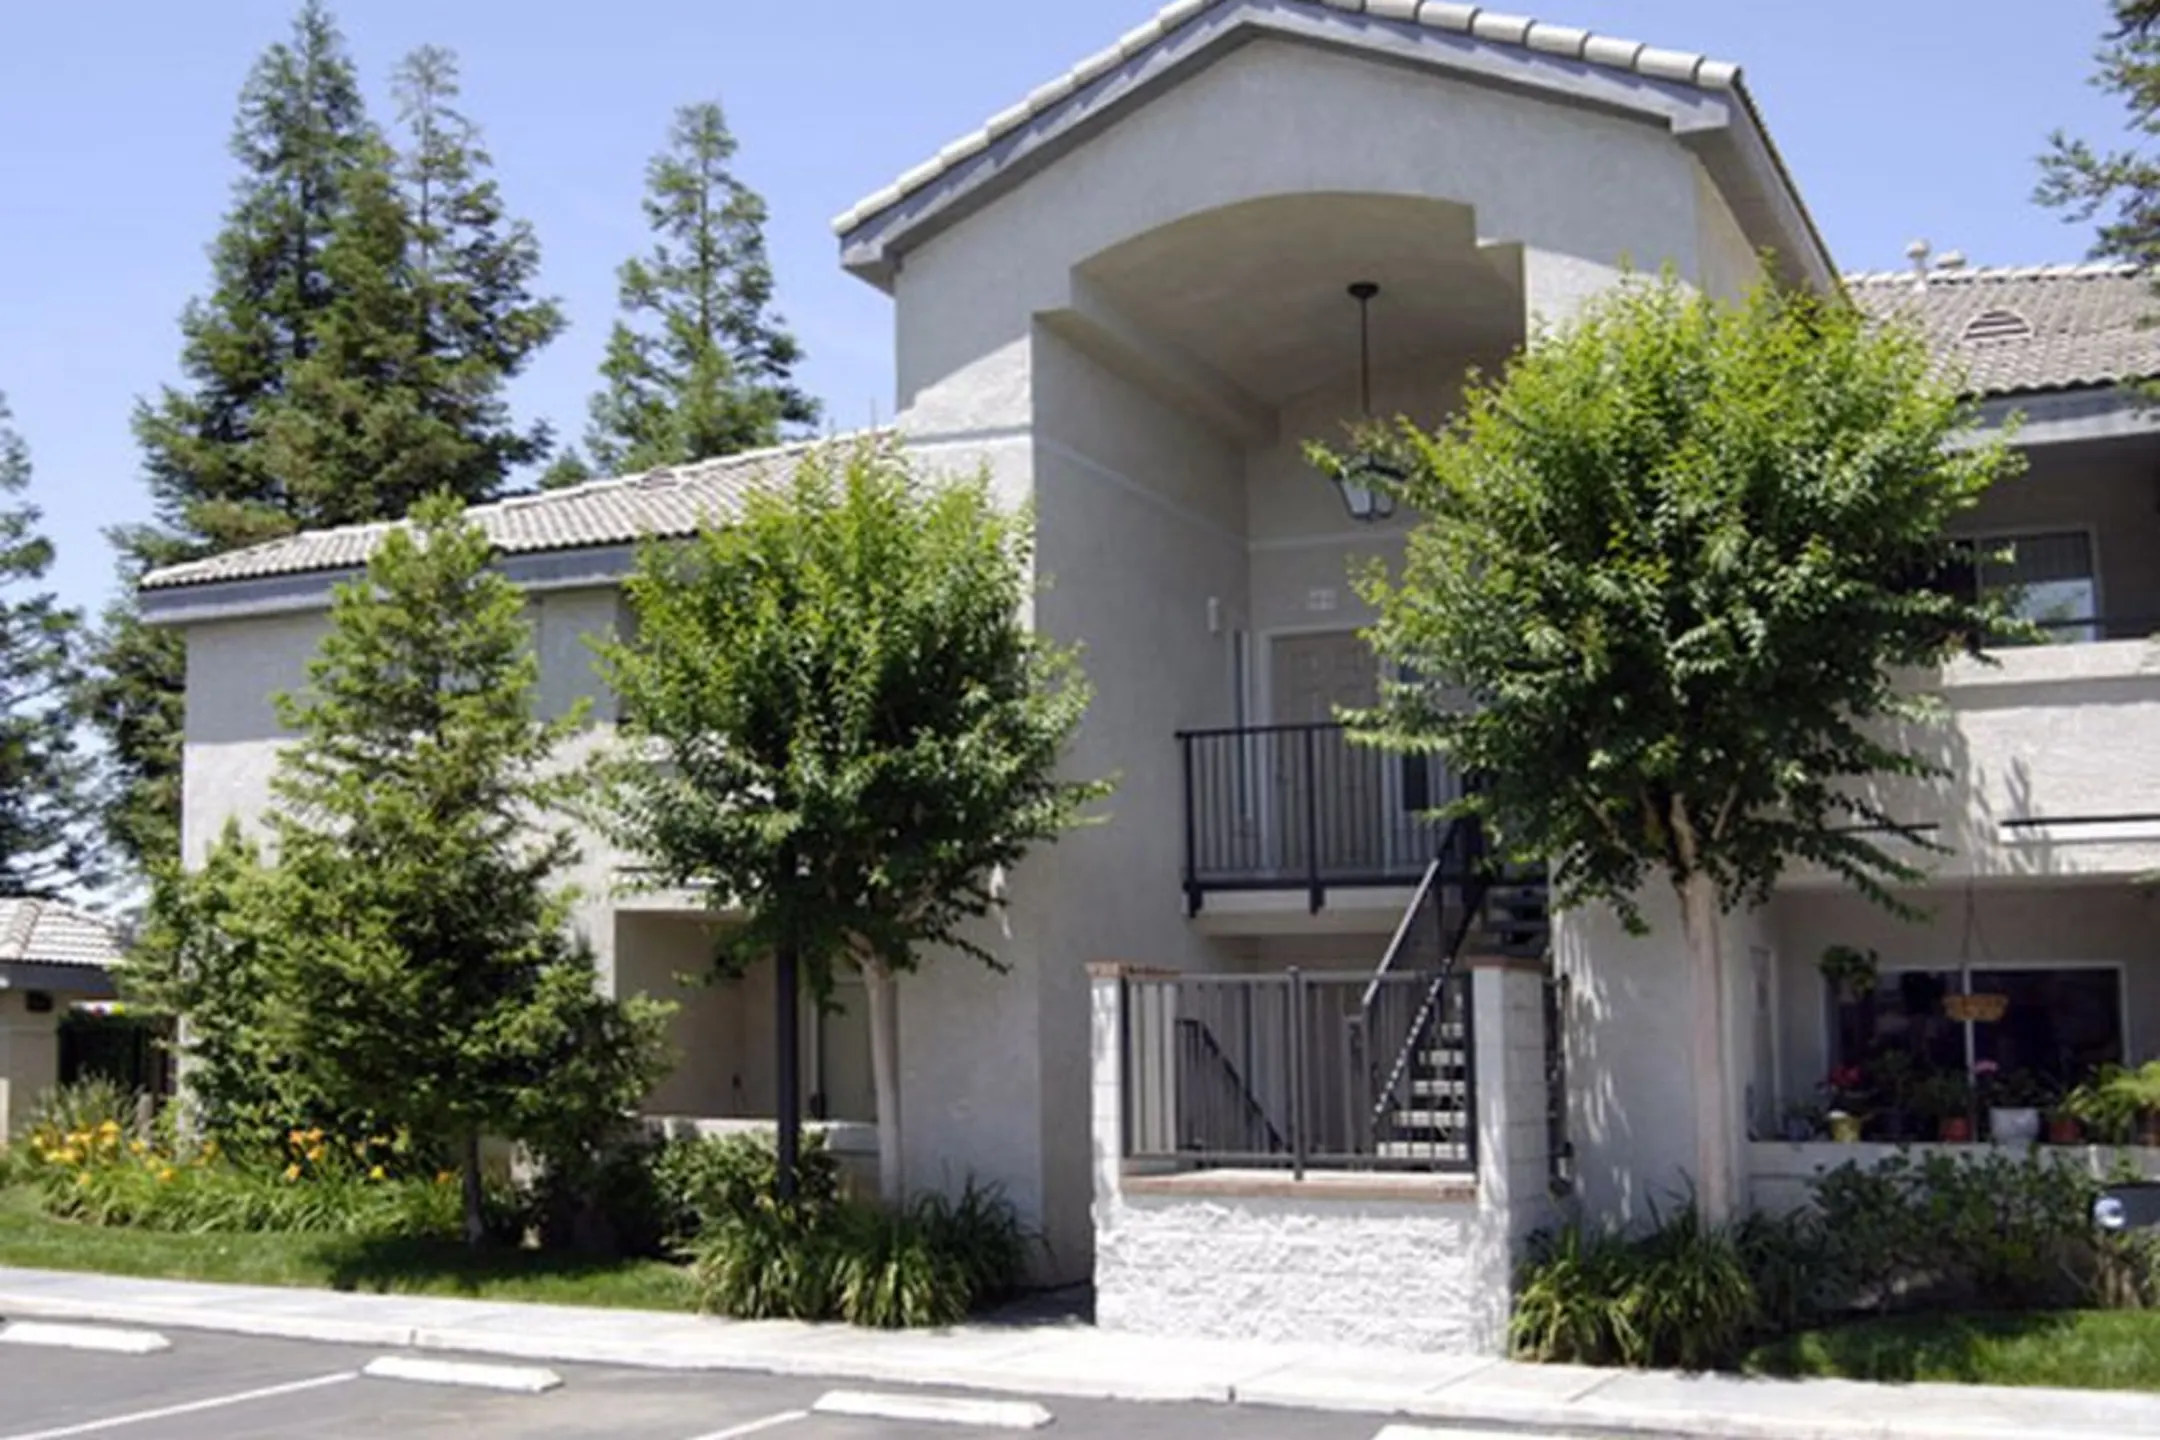 Building - Villa Mondavi - Bakersfield, CA